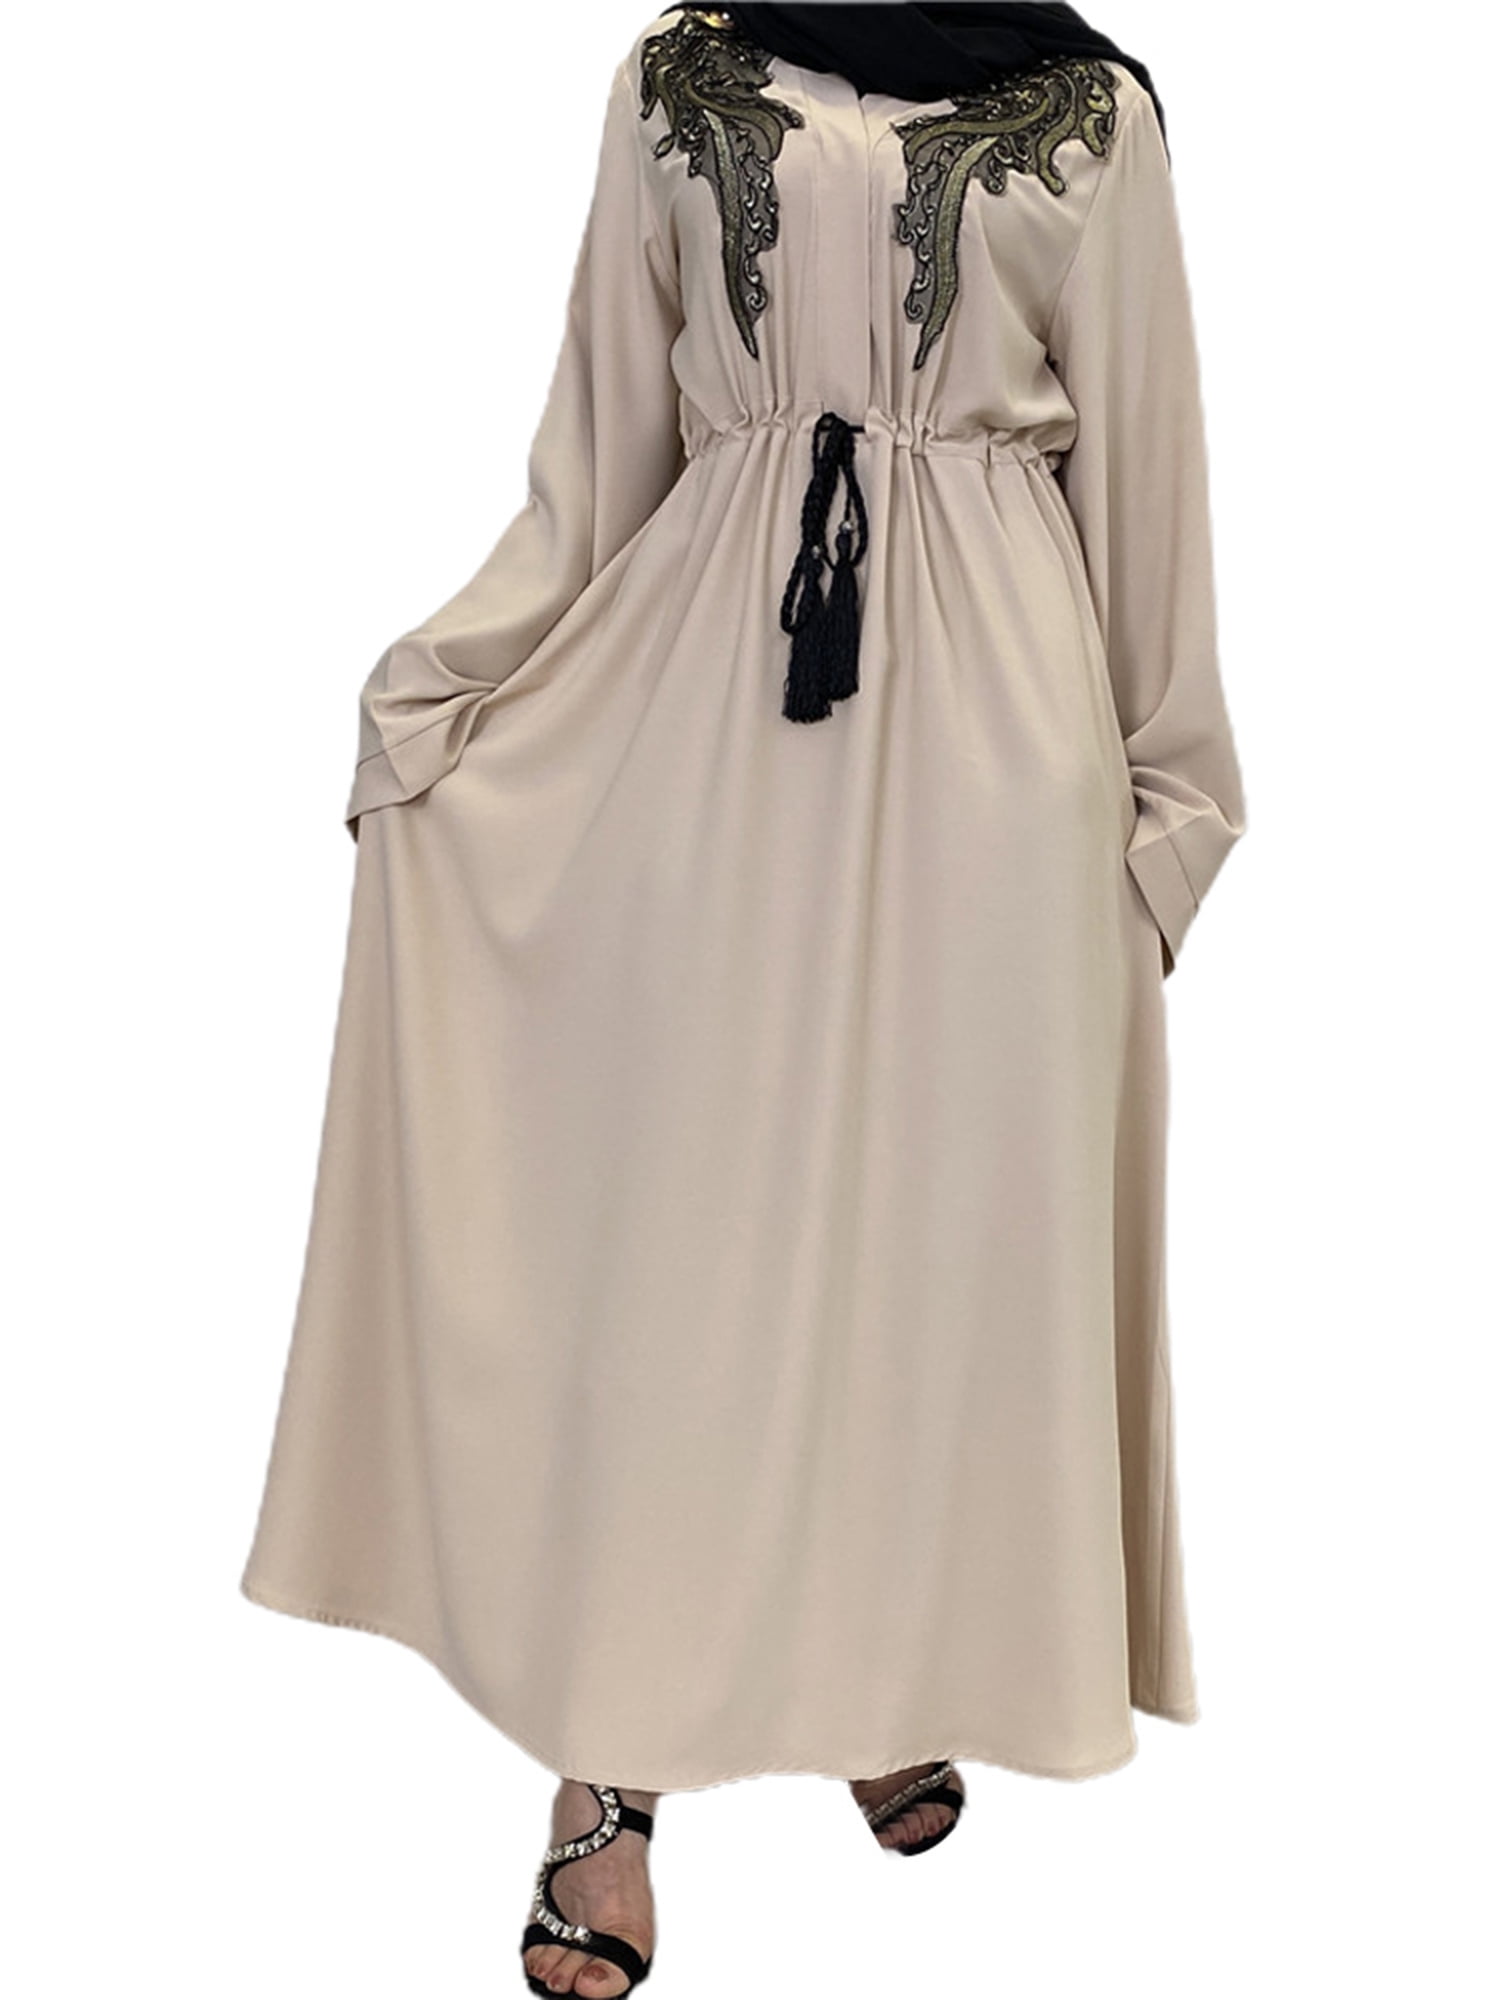 Shakub Womens Muslim Jilbab Embroidered Loose Robe Dress Muslim Evening Party Long Sleeve